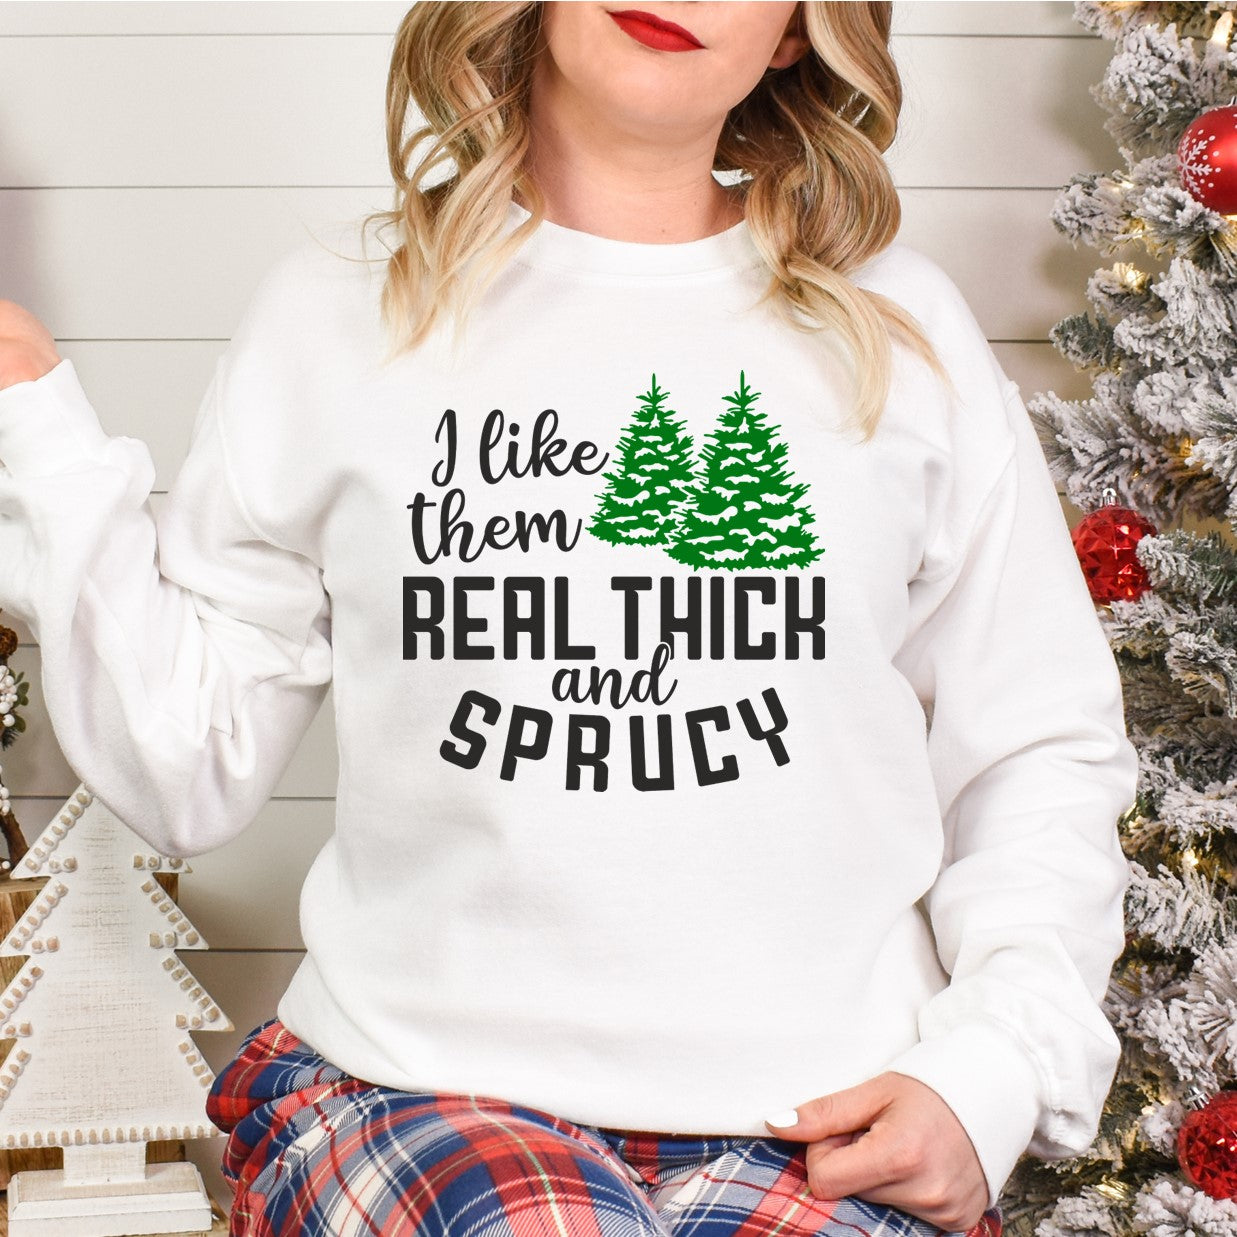 I like them Thick and Sprucy - Crewneck Sweatshirt